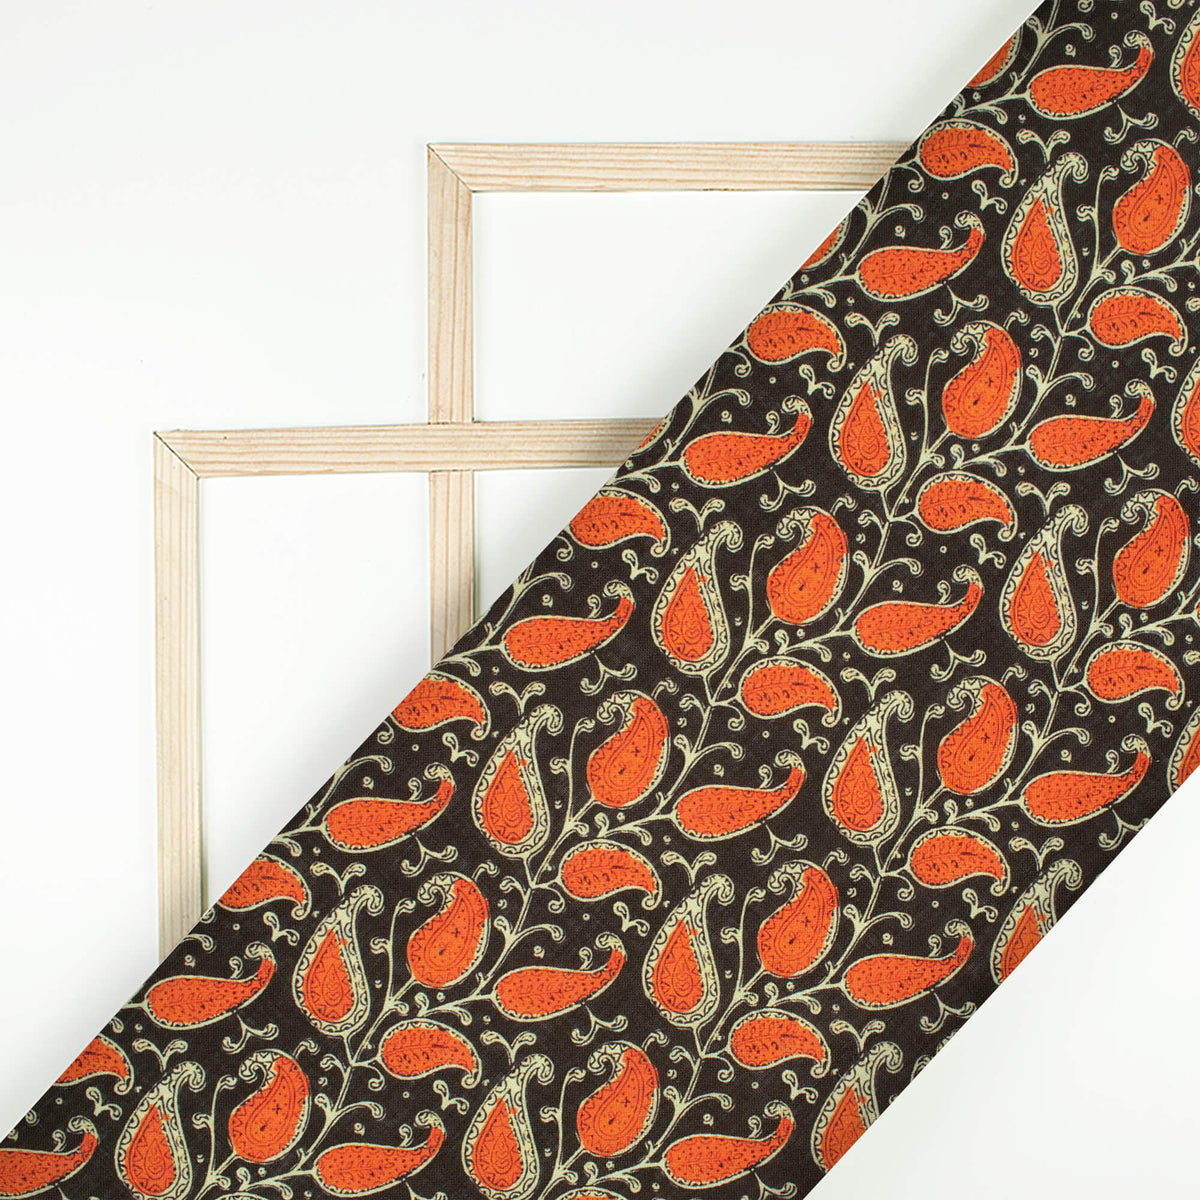 Black And Dark Orange Paisley Pattern Digital Print Linen Textured Fabric (Width 56 Inches)